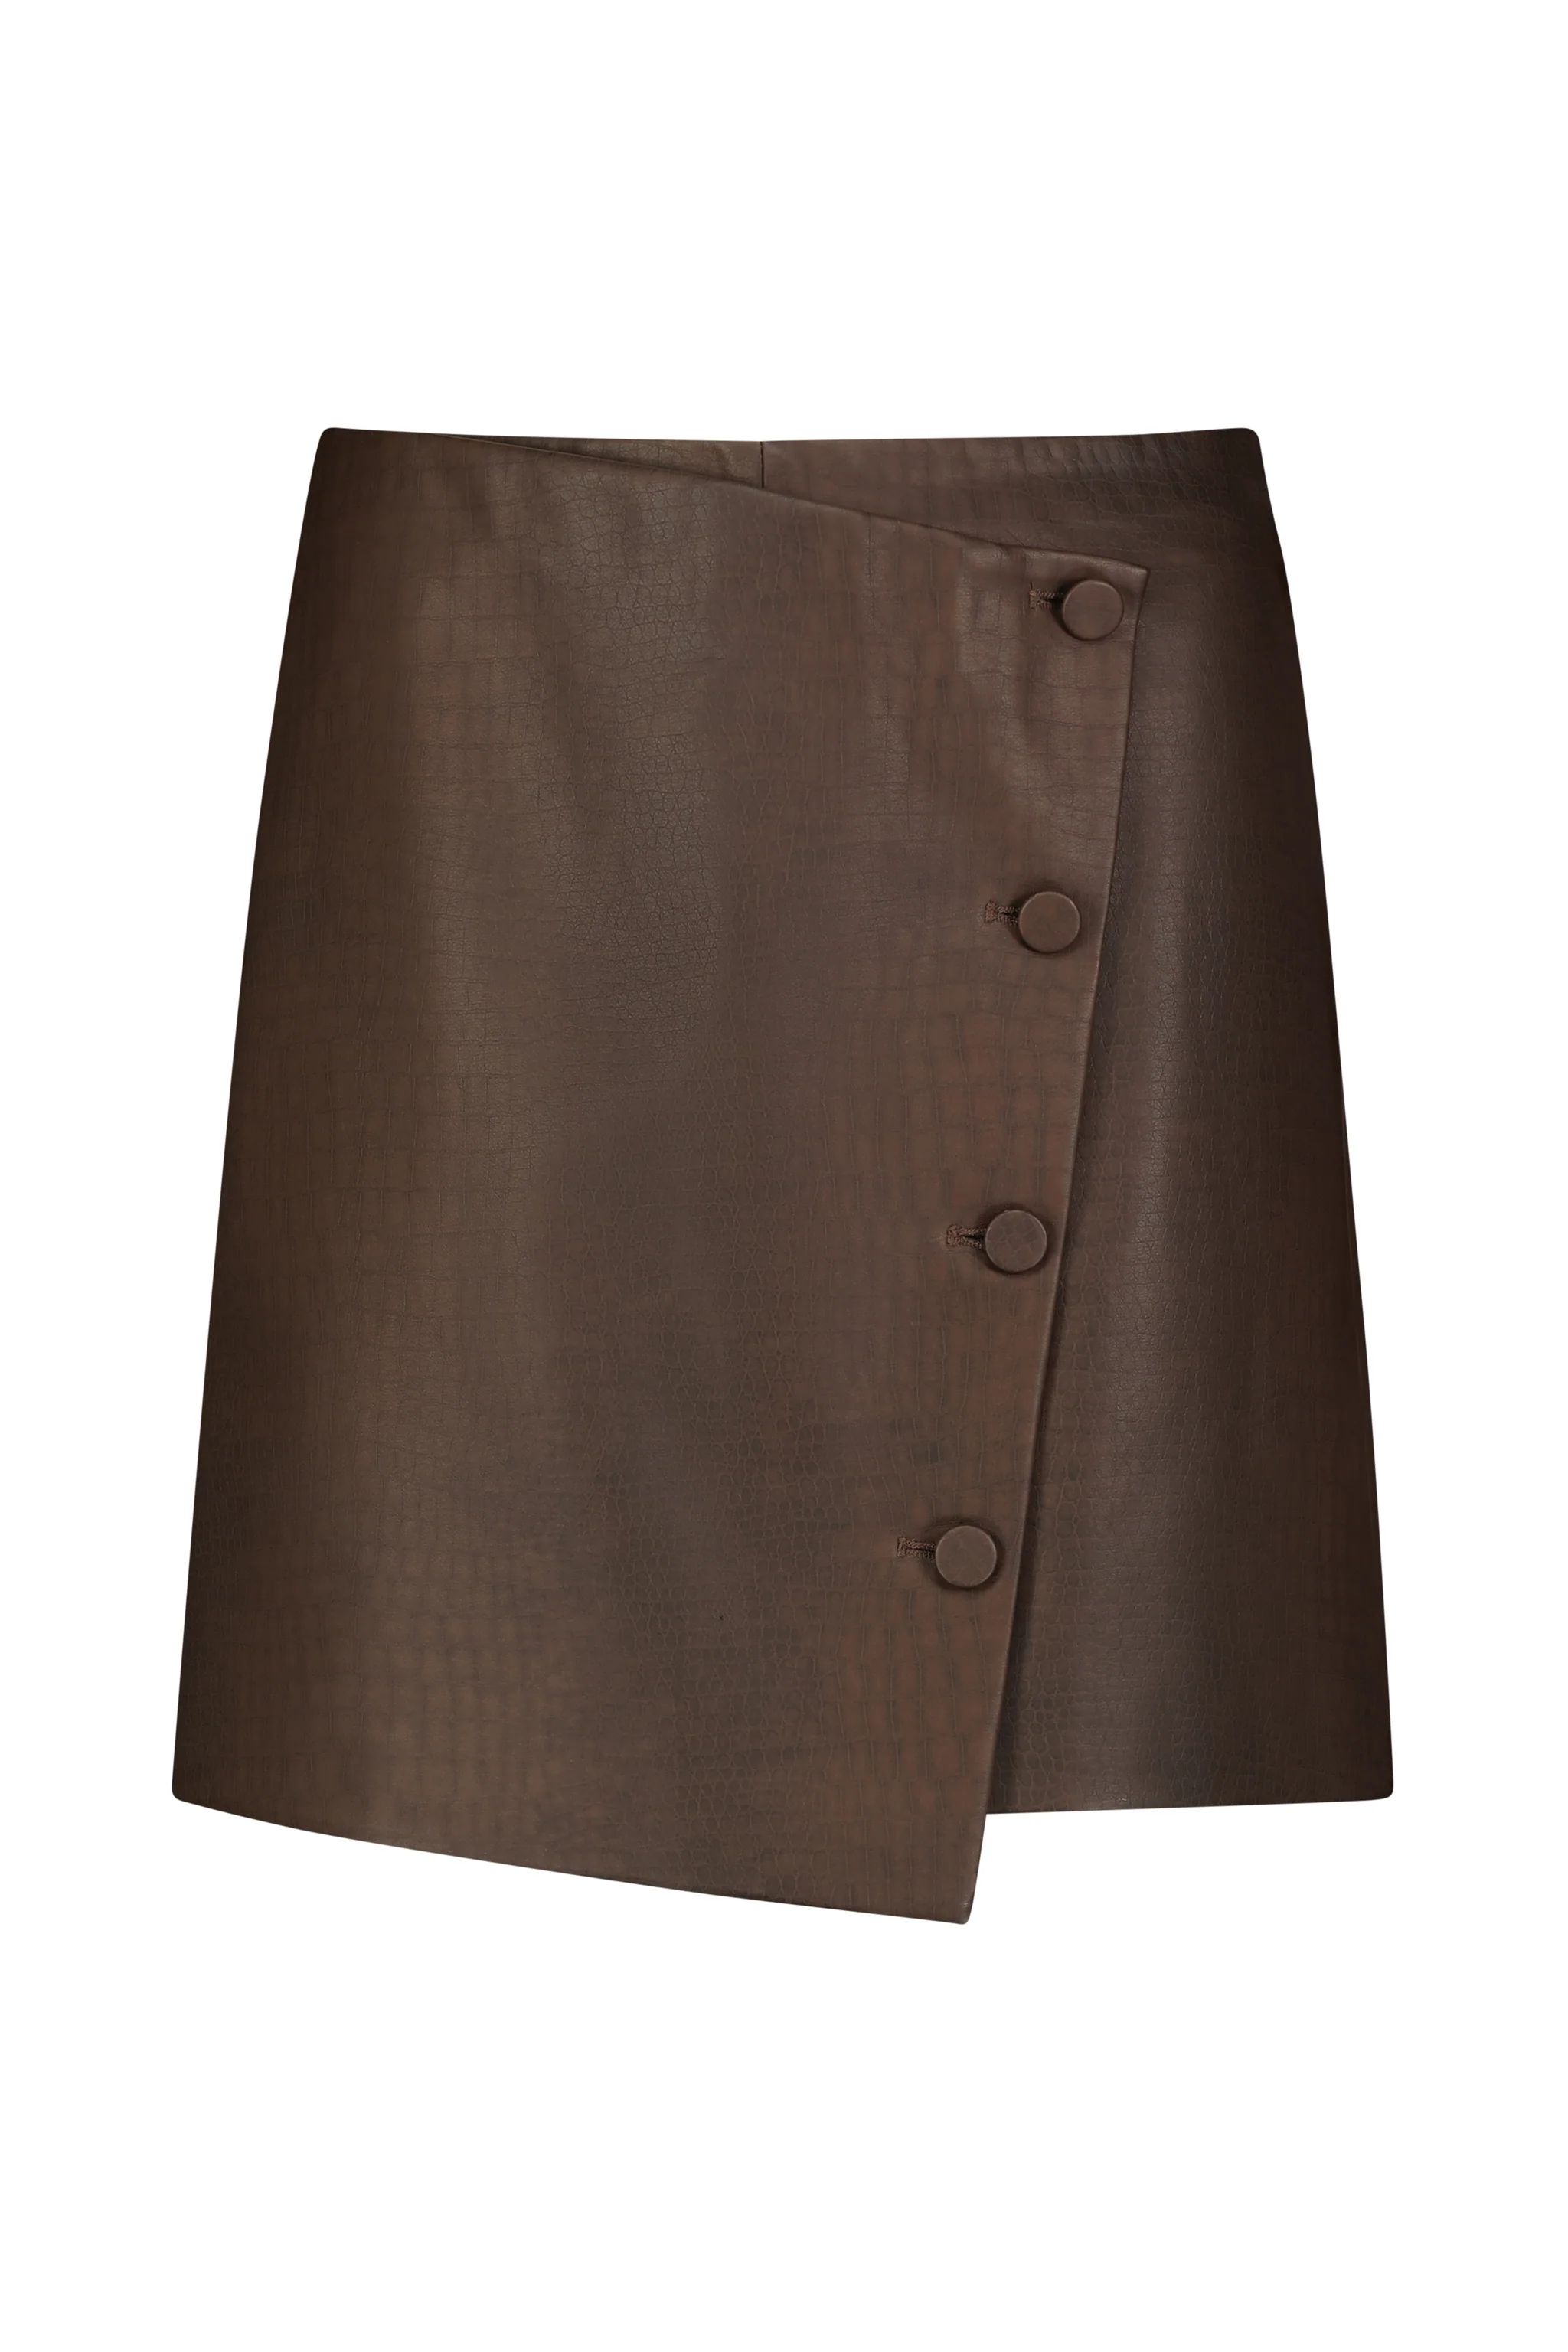 Vegan Croc Leather Wrap Skirt | MAYSON the label